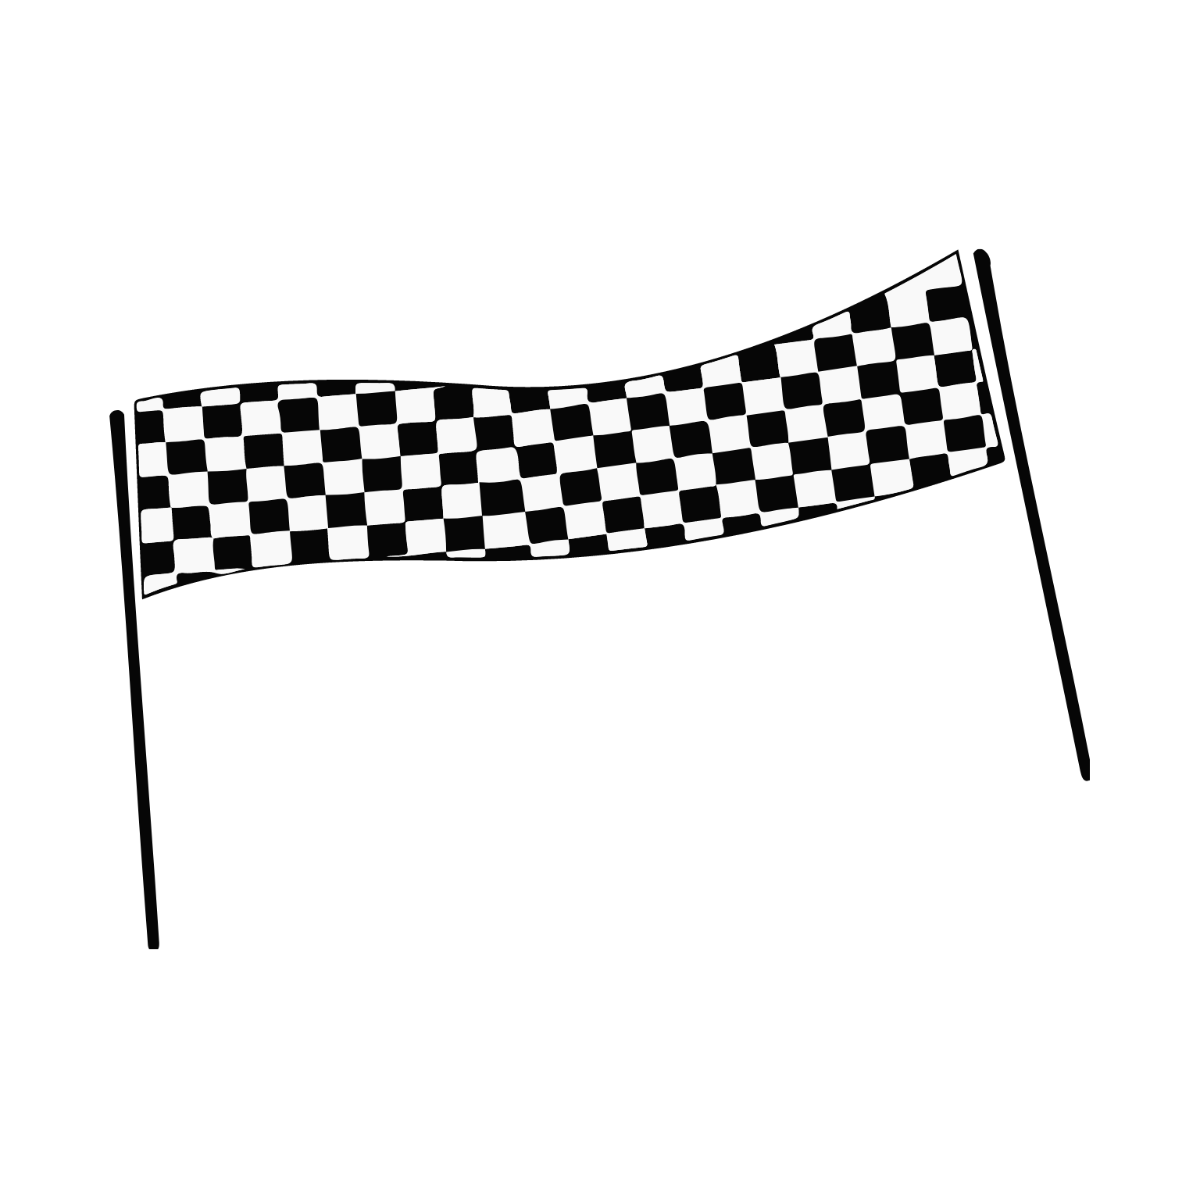 Racing Checkered Flag Border clipart Template